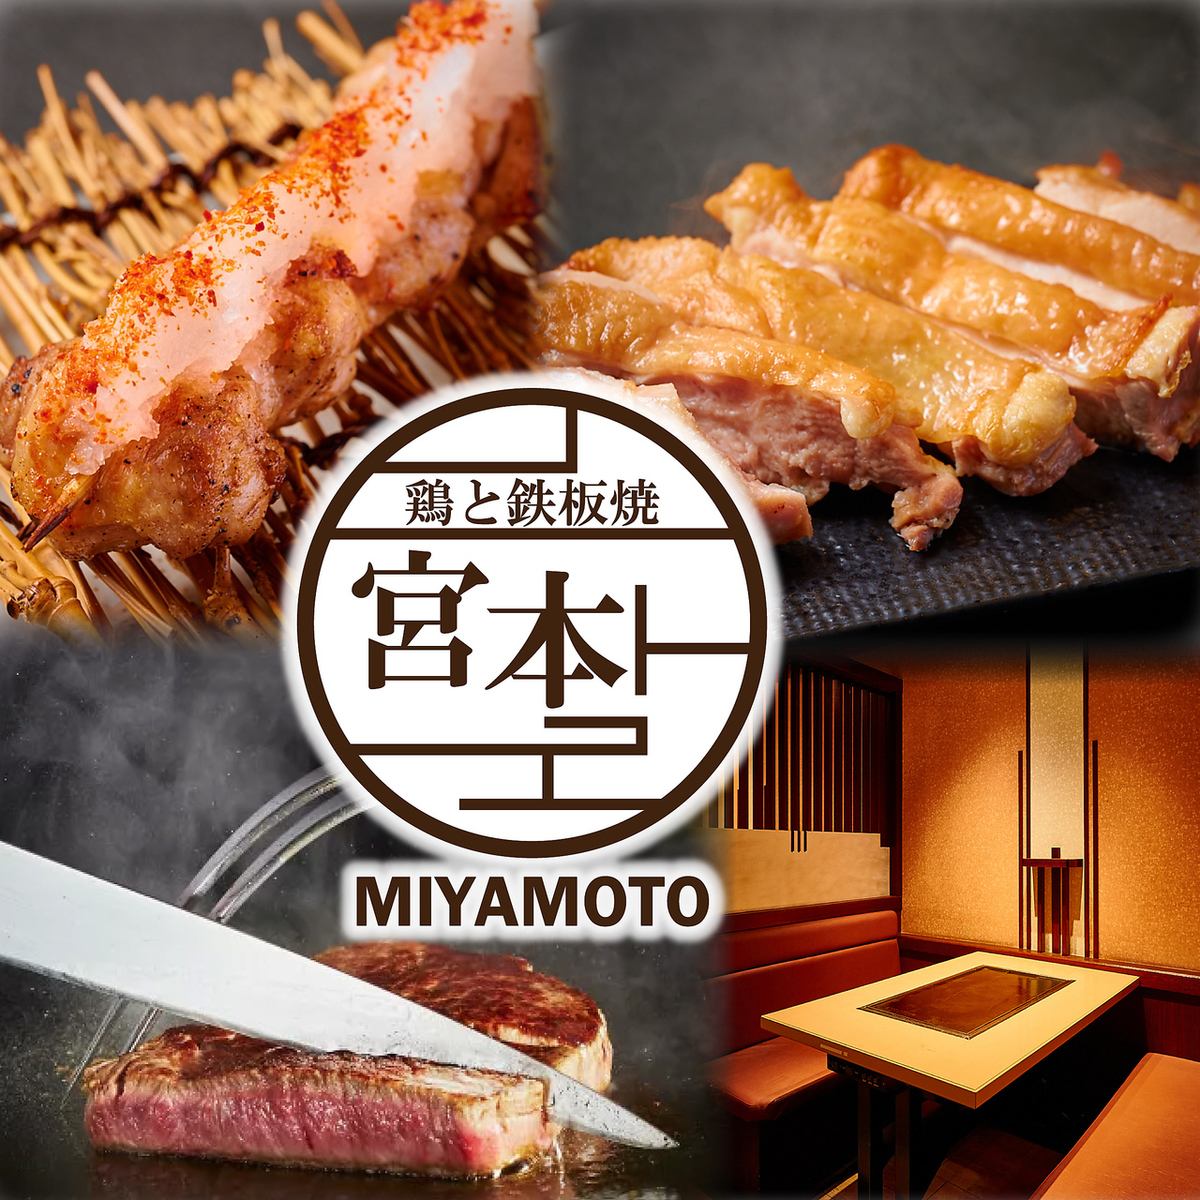 ■ Chicken x Teppanyaki x Creative Japanese food Miyamoto Esola Ikebukuro store ■ Banquet / entertainment / online reservation 24 hours reception